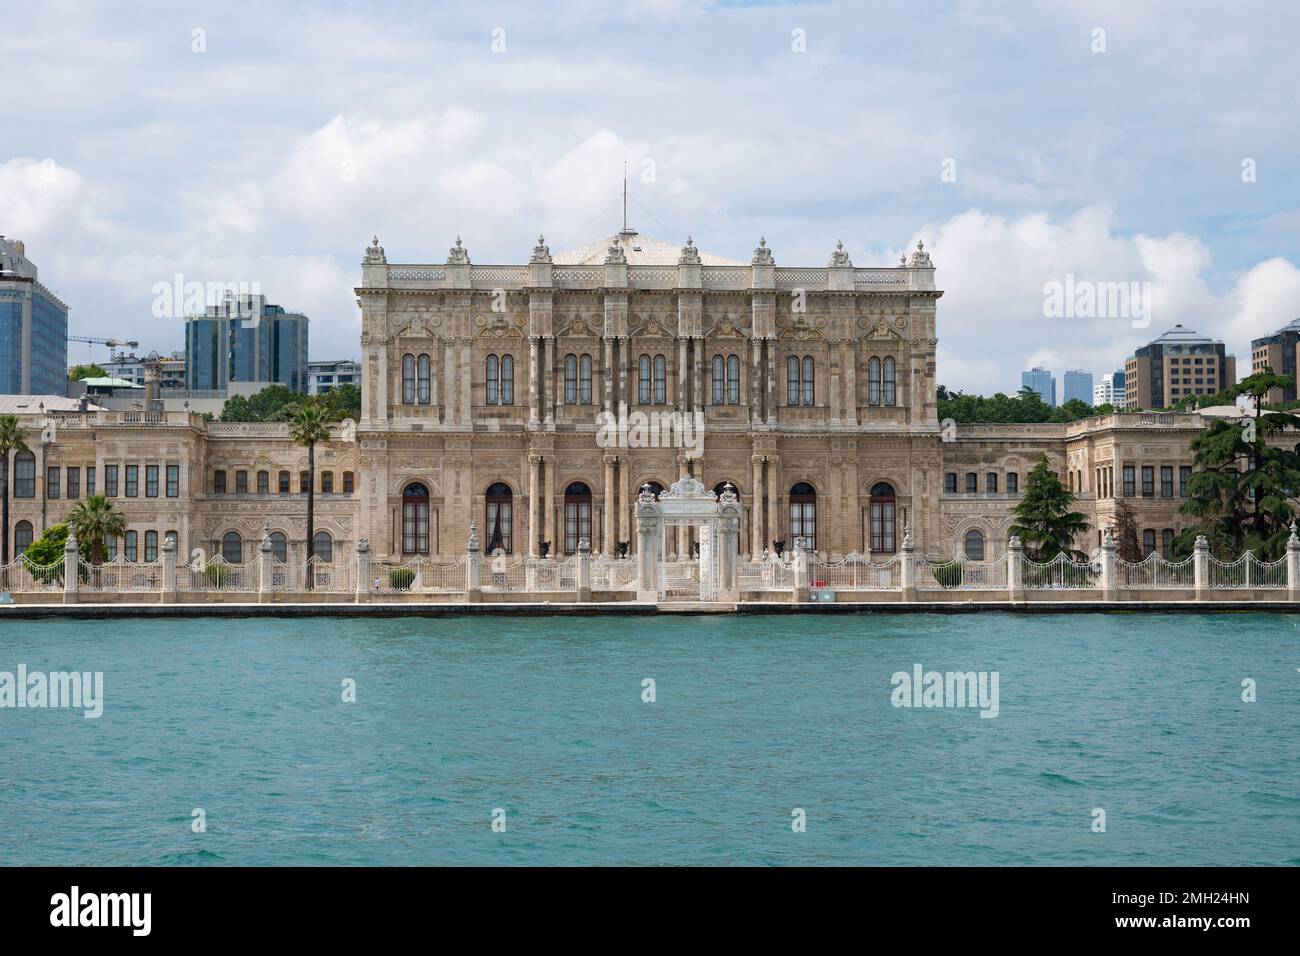 Dolmabahce Palace museum on the Bospohorus River, Istanbul, Turkey Stock Photo